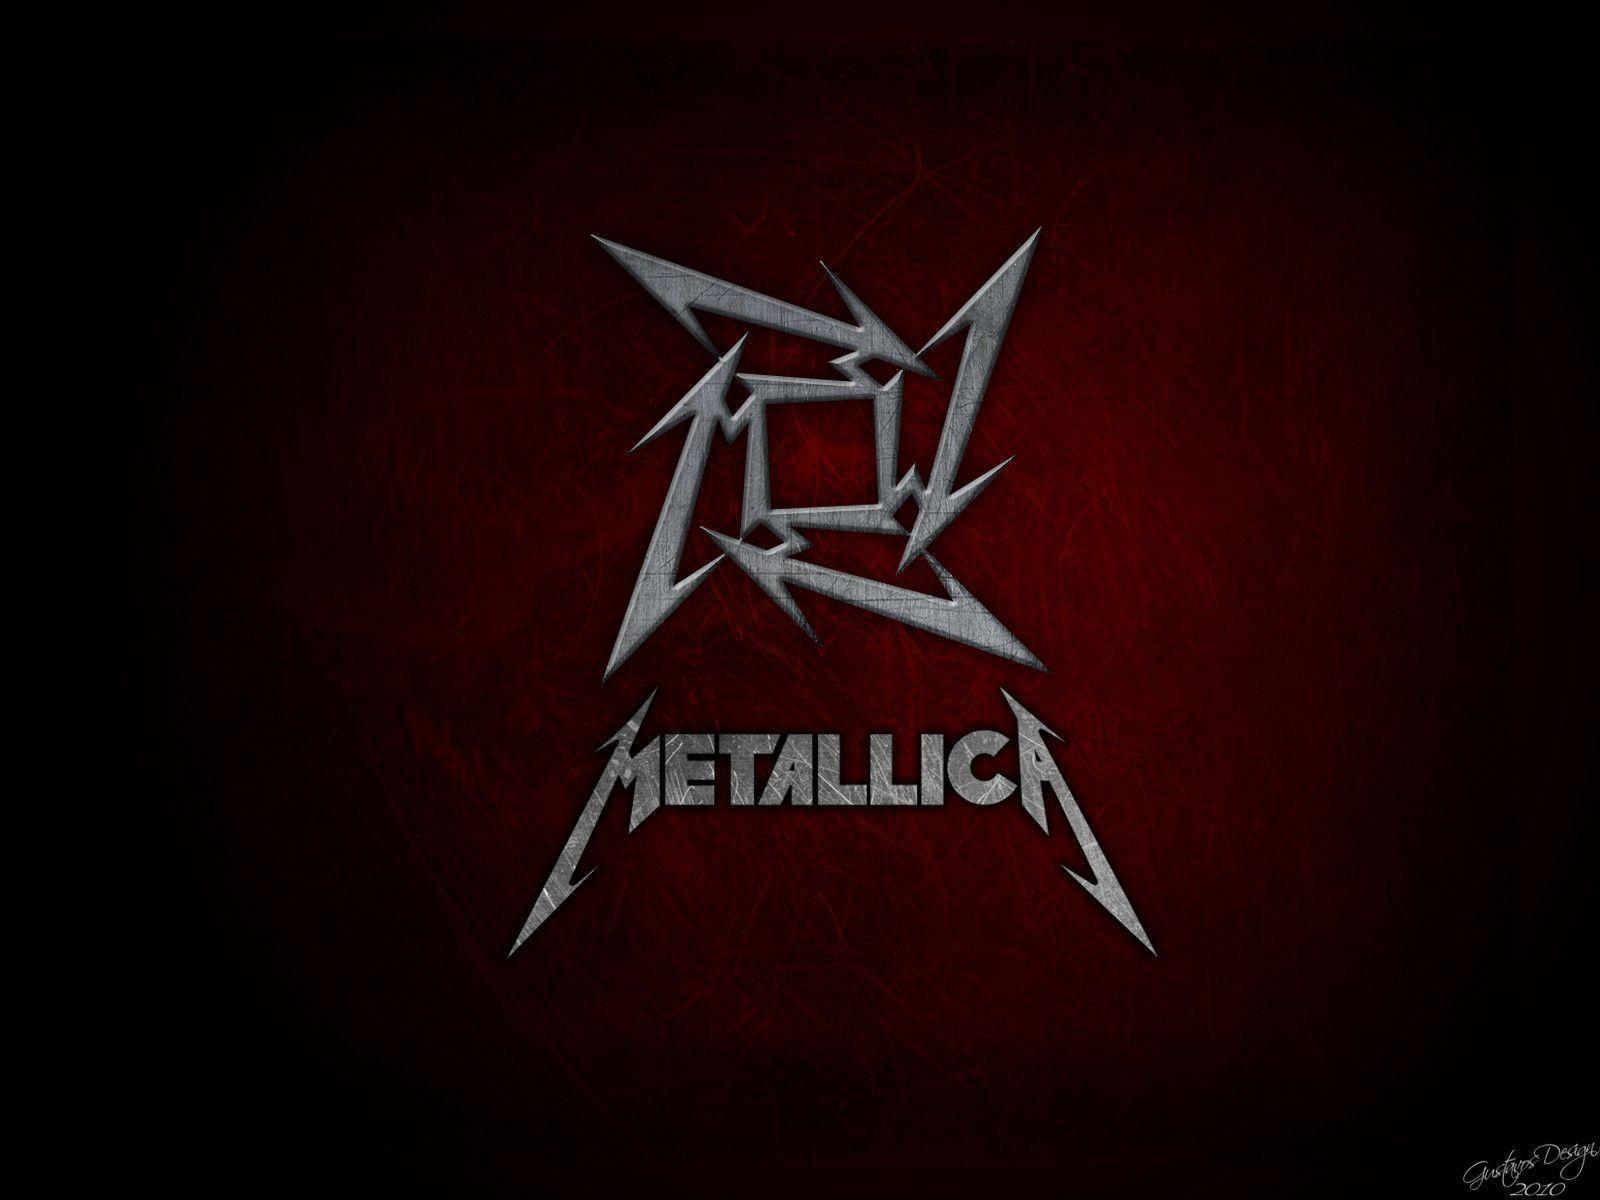 Metallica Black Album Wallpaper